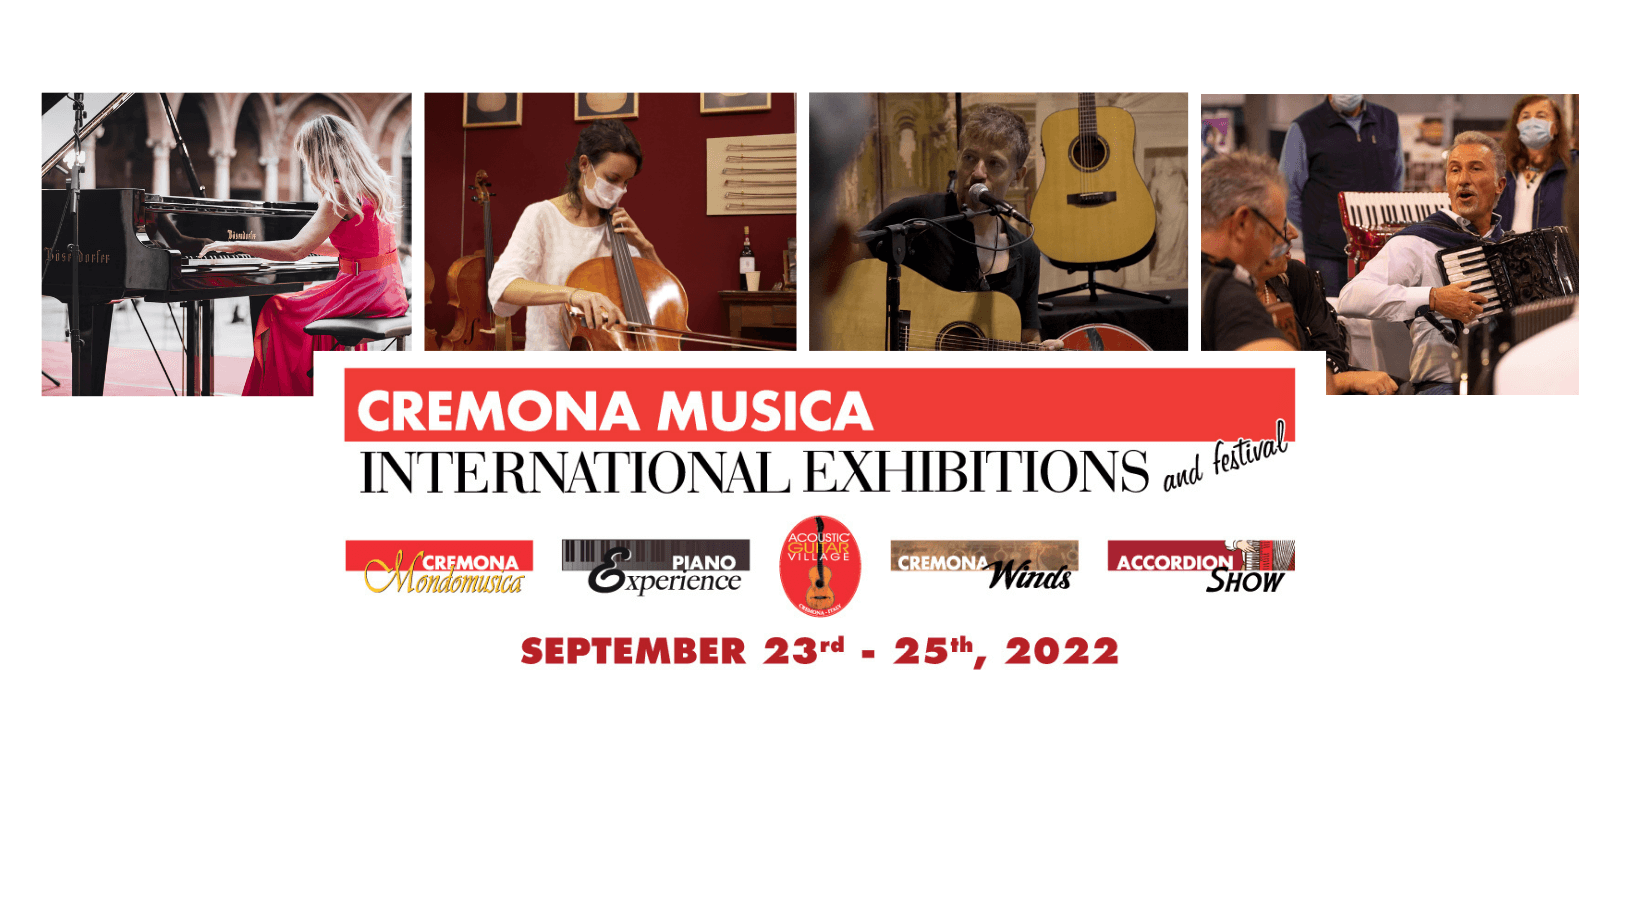 Cremona Musica International Exhibitions and Festival